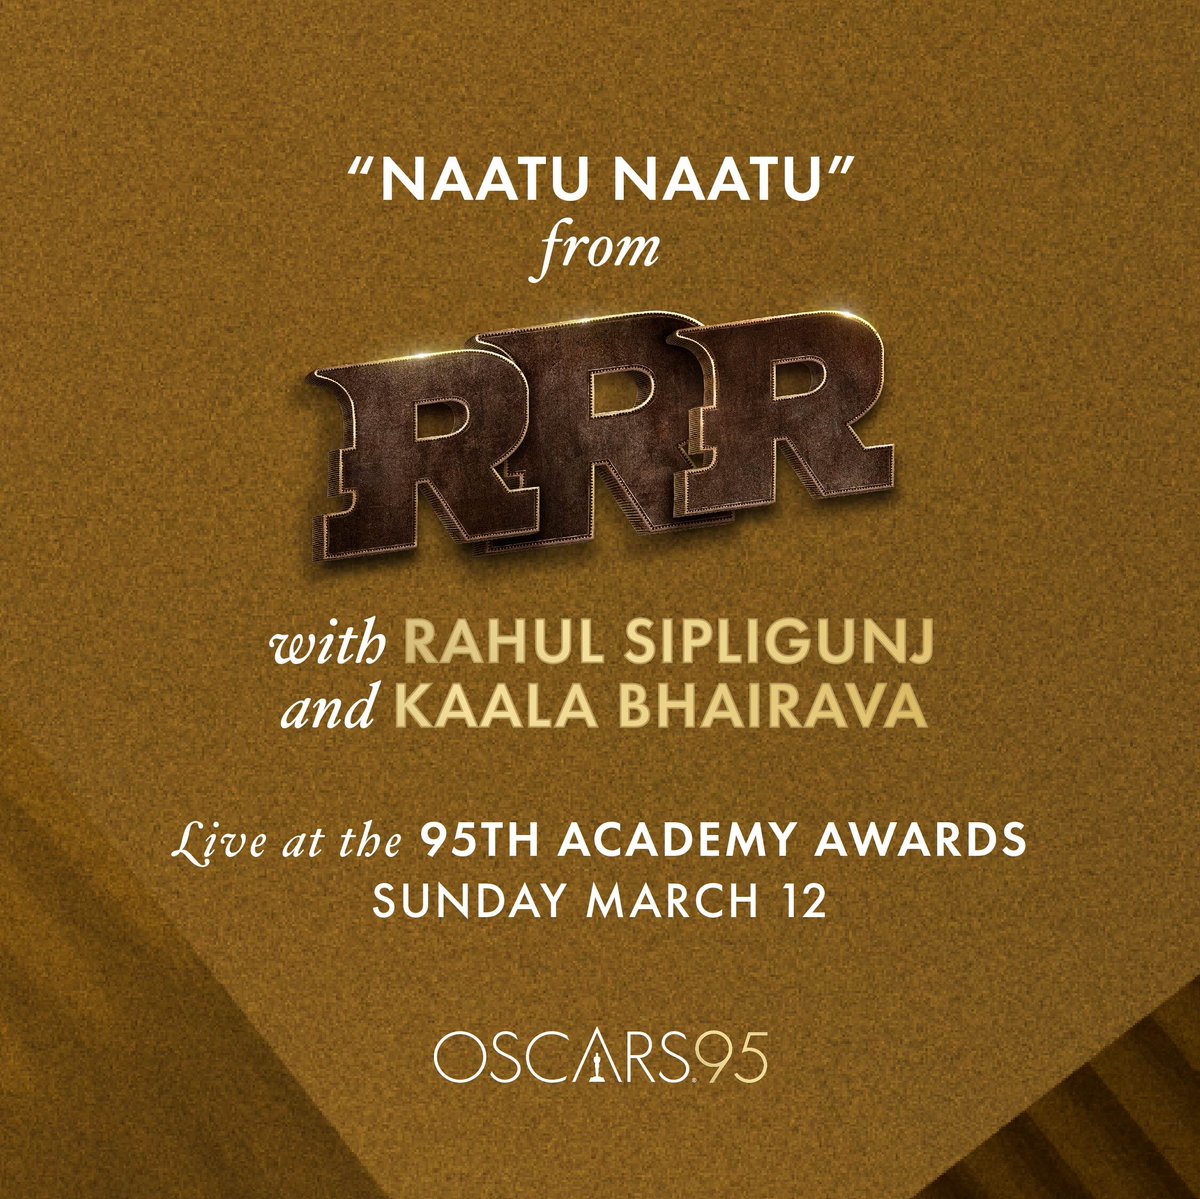 Rahul Sipligunj and Kaala Bhairava. “Naatu Naatu.' LIVE at the 95th Oscars. Tune into ABC to watch the Oscars LIVE on Sunday, March 12th at 8e/5p! #Oscars95